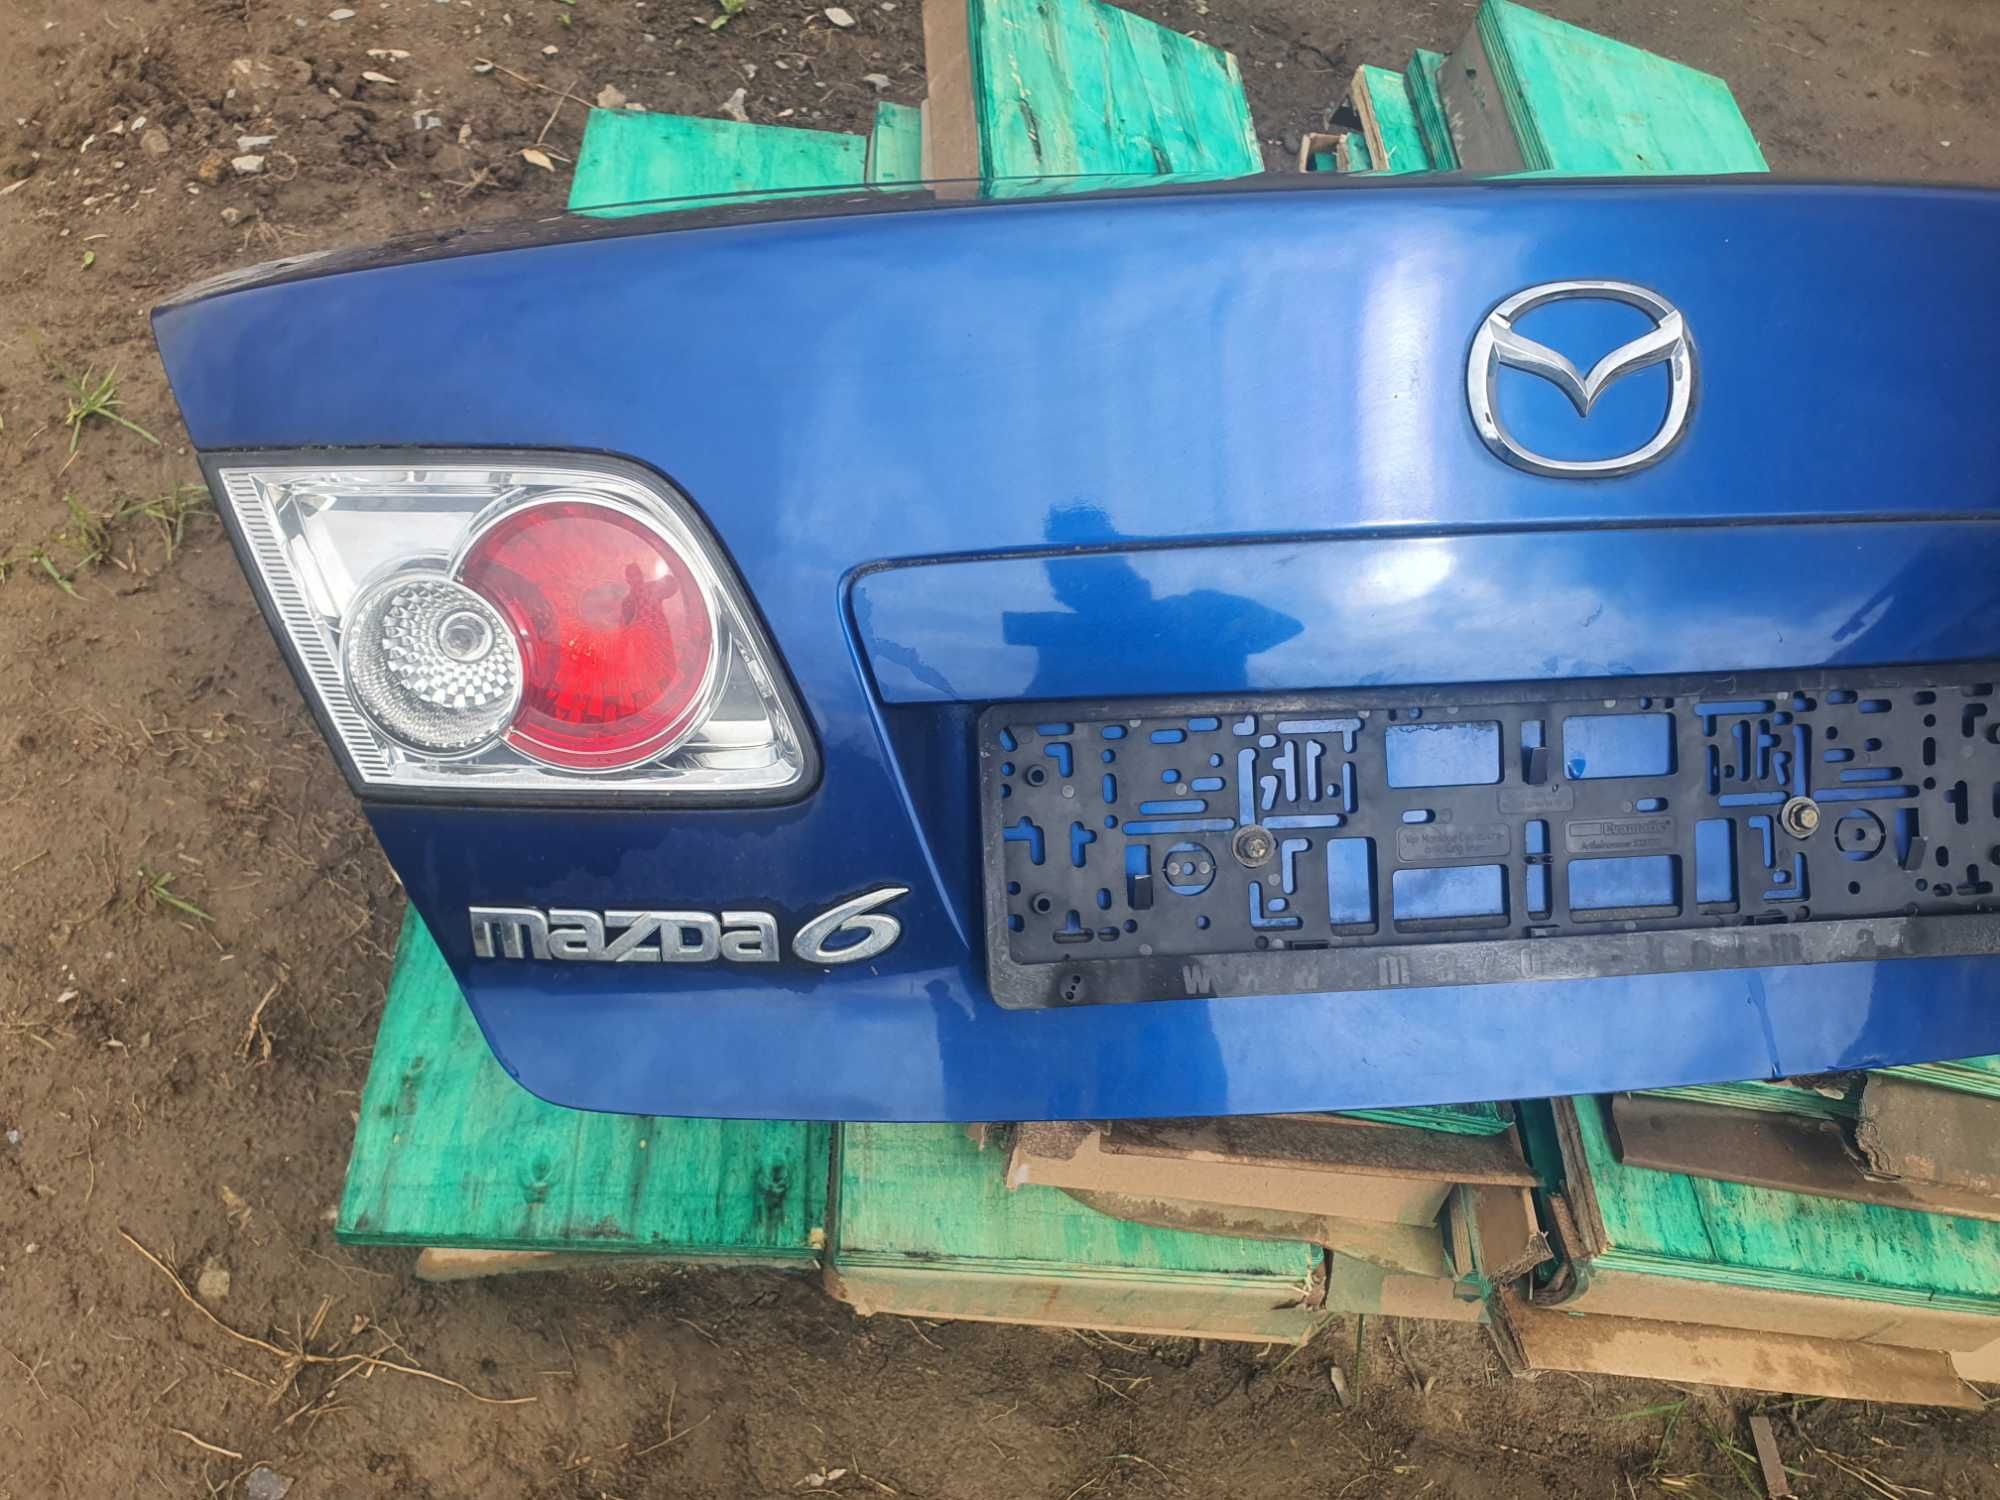 Emblemat Mazda 6 GG napis